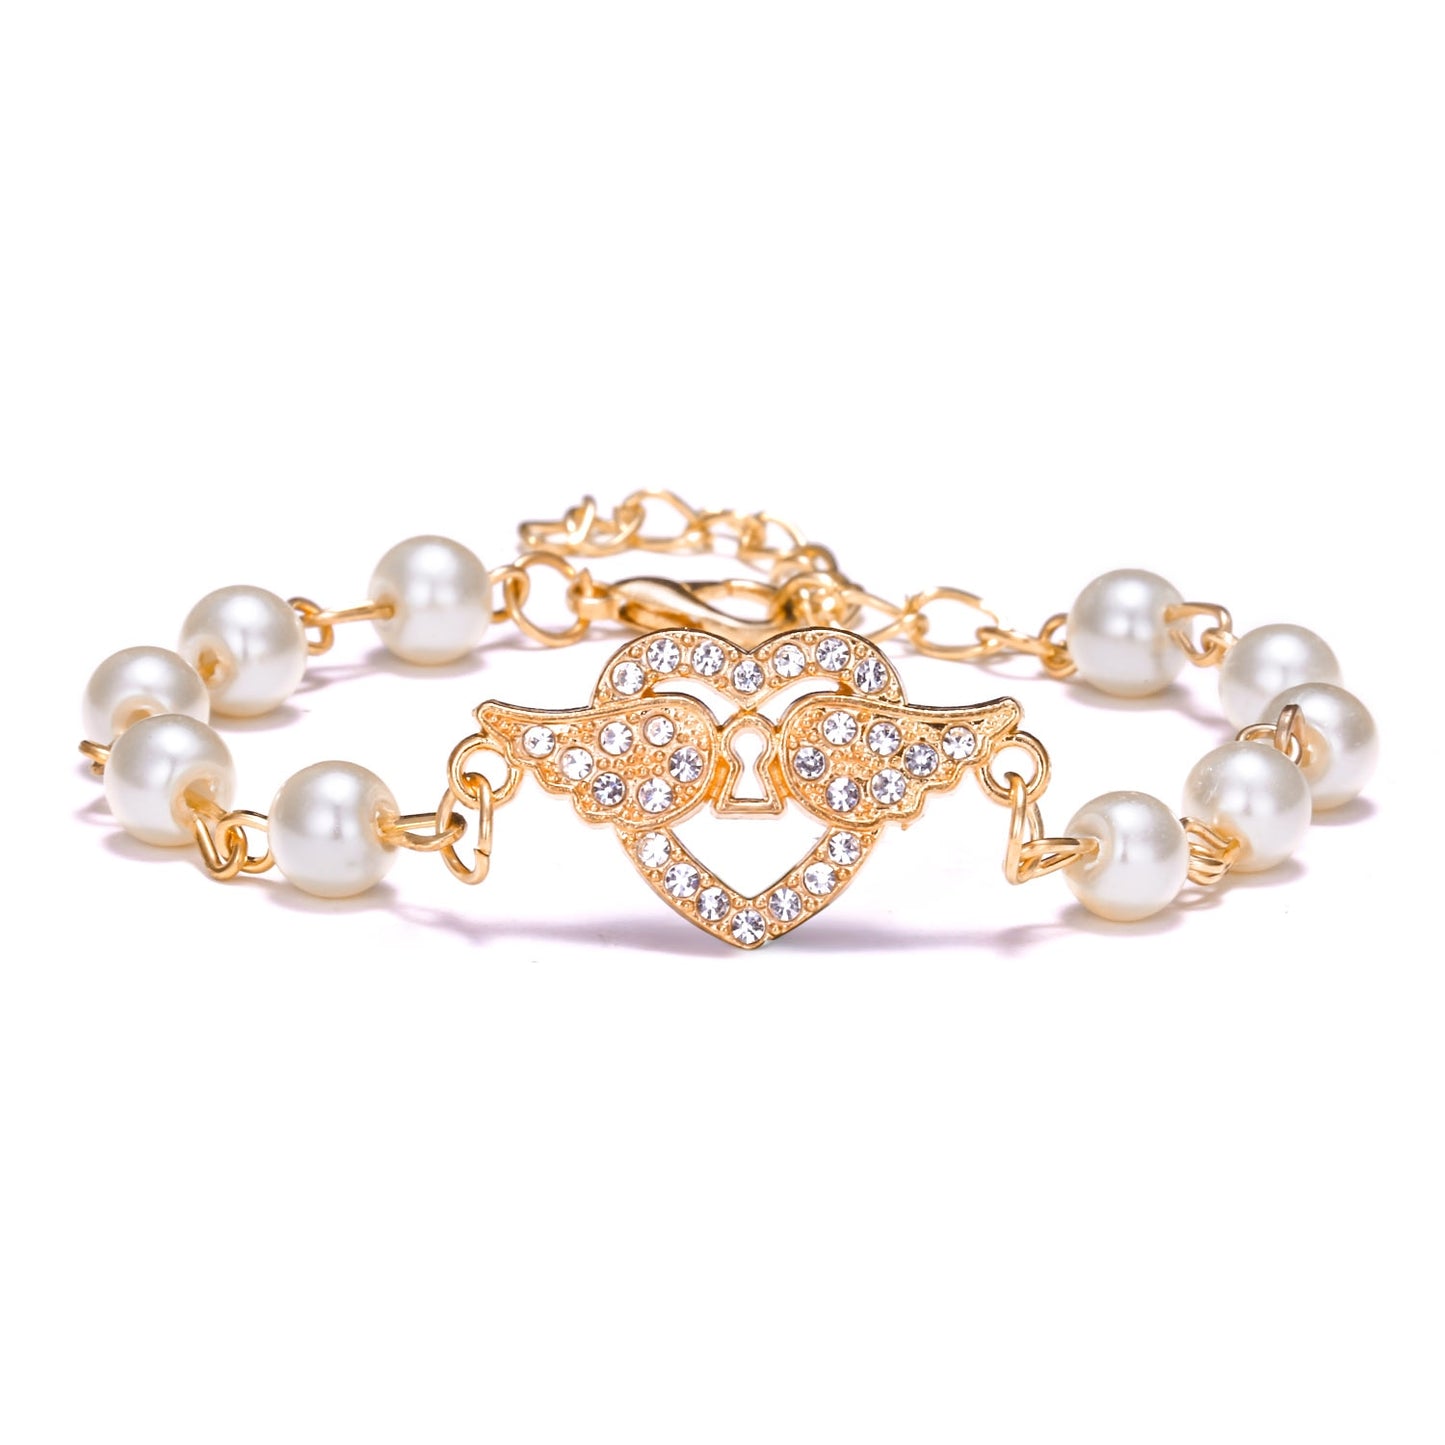 Pearl charm bracelet